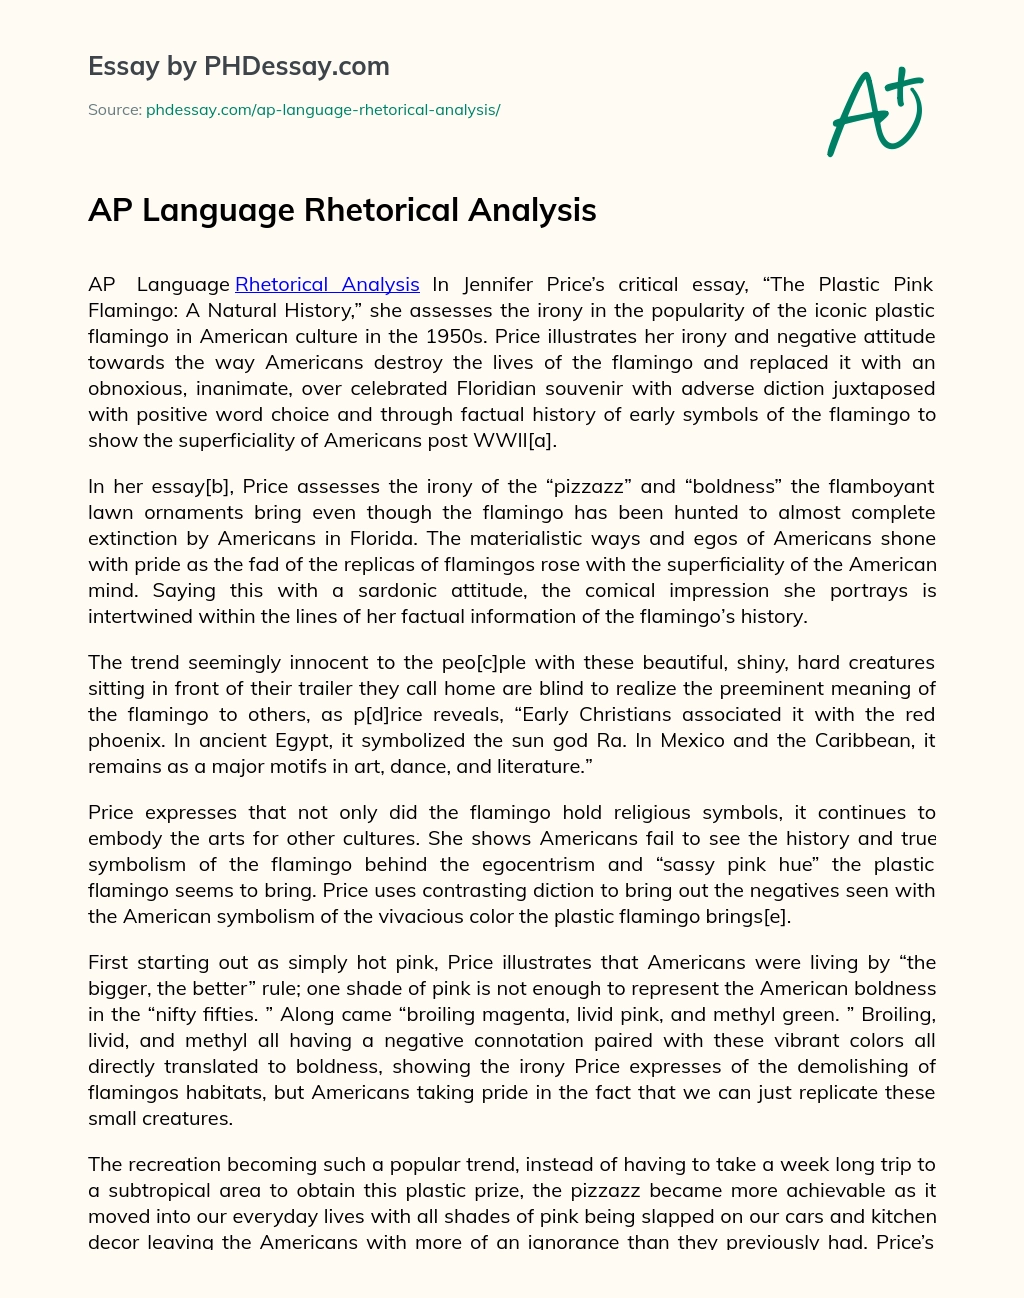 AP Language Rhetorical Analysis essay